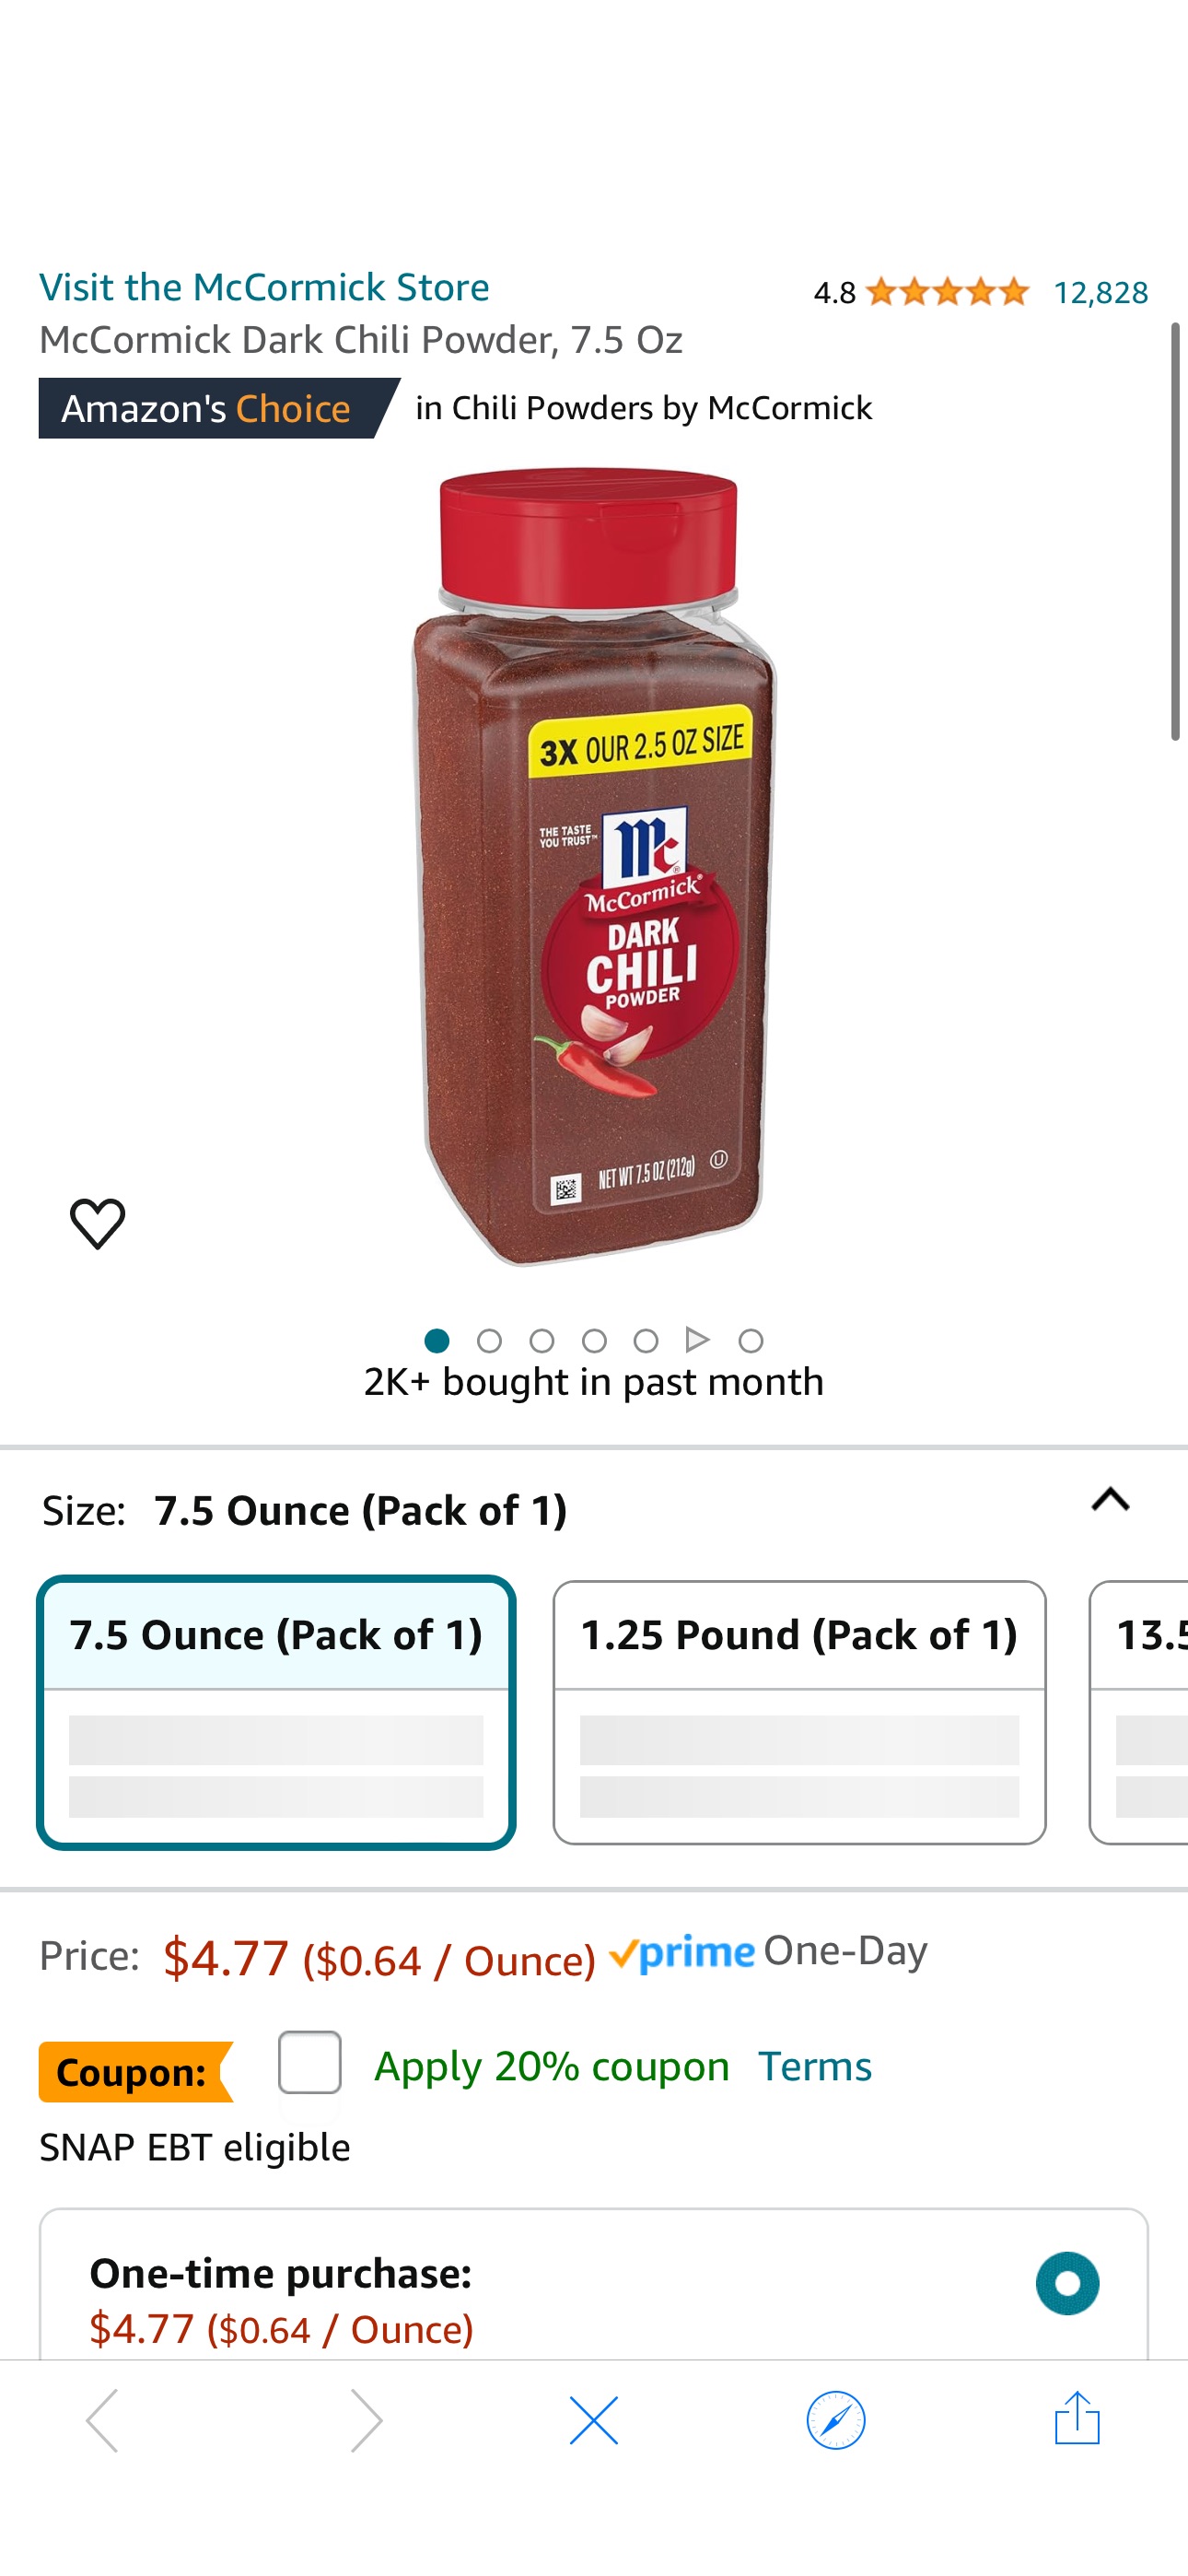 Amazon.com : McCormick Dark Chili Powder, 7.5 Oz : Grocery & Gourmet Food coupon